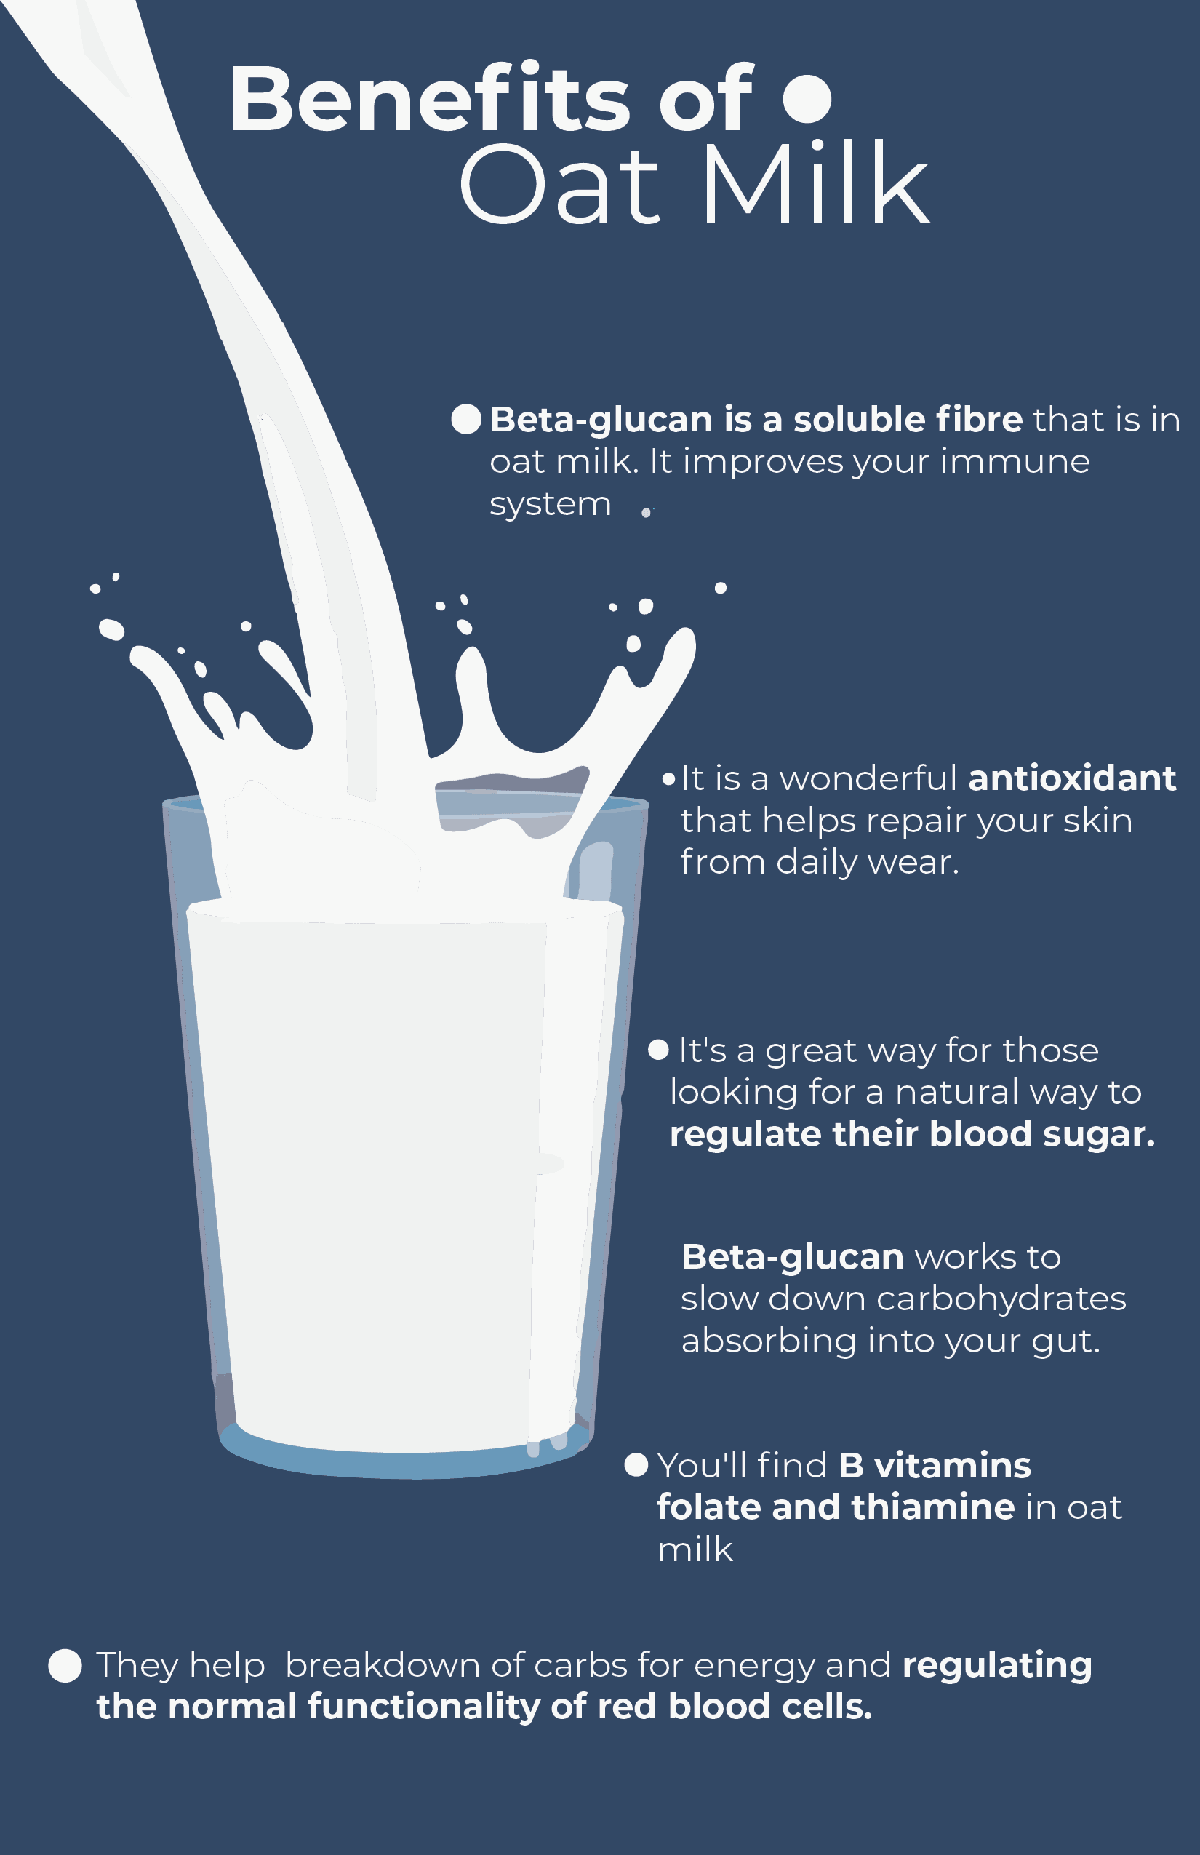 Oat Milk Benefits Infographic Image